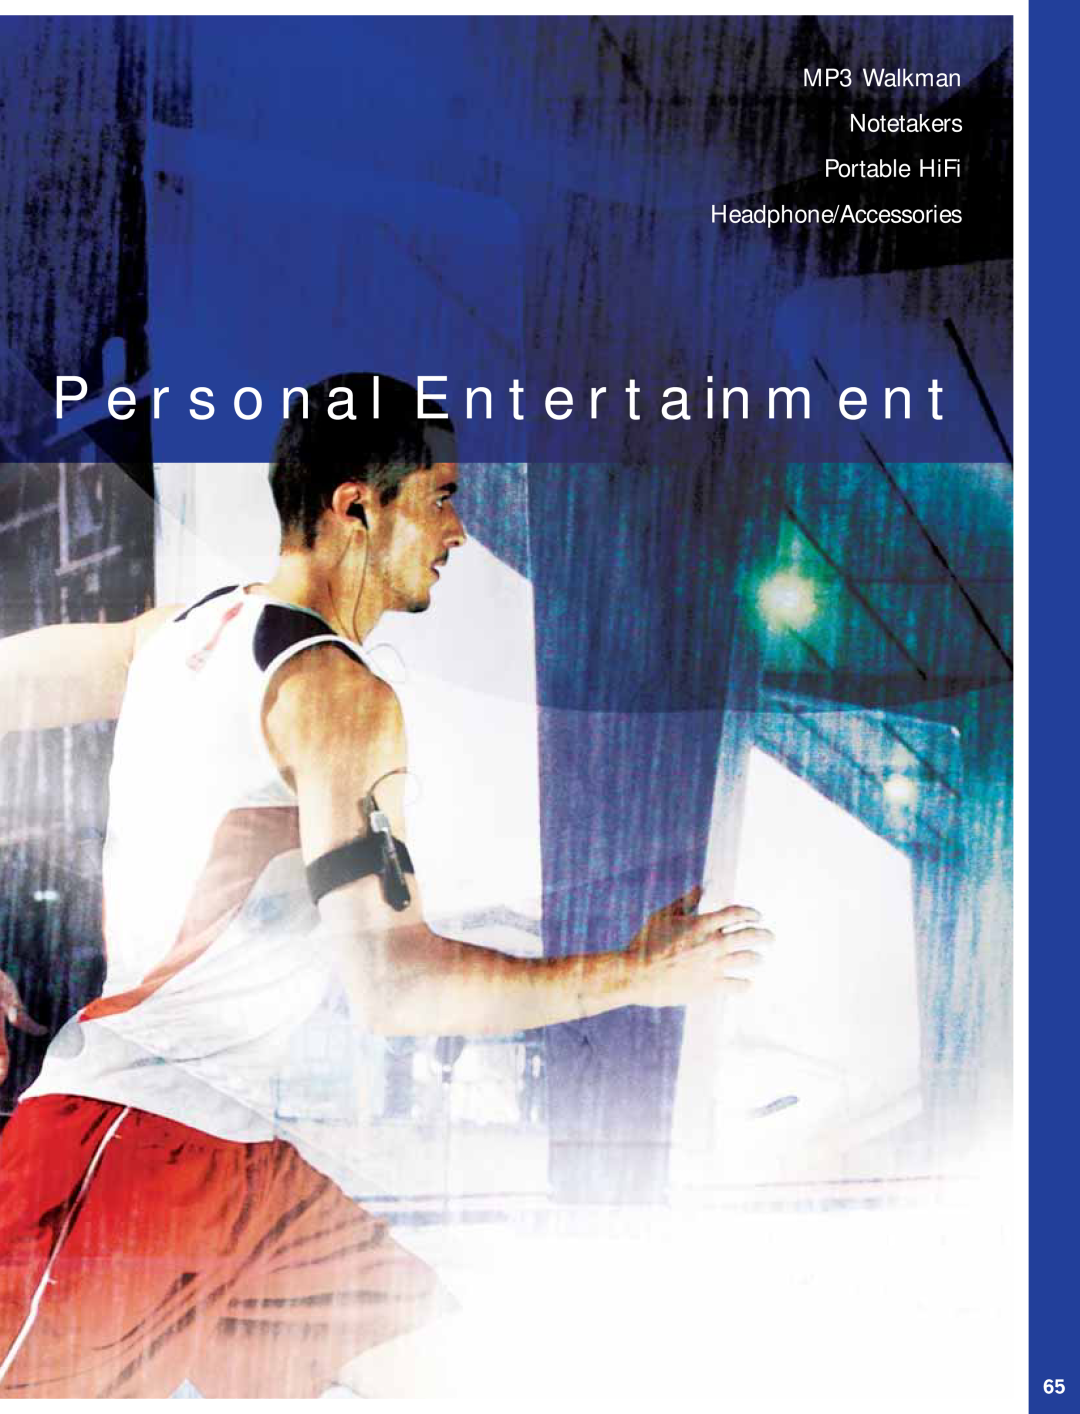 Sony Bravia LCD TV manual Personal Entertainment, MP3 Walkman Notetakers Portable HiFi Headphone/Accessories 